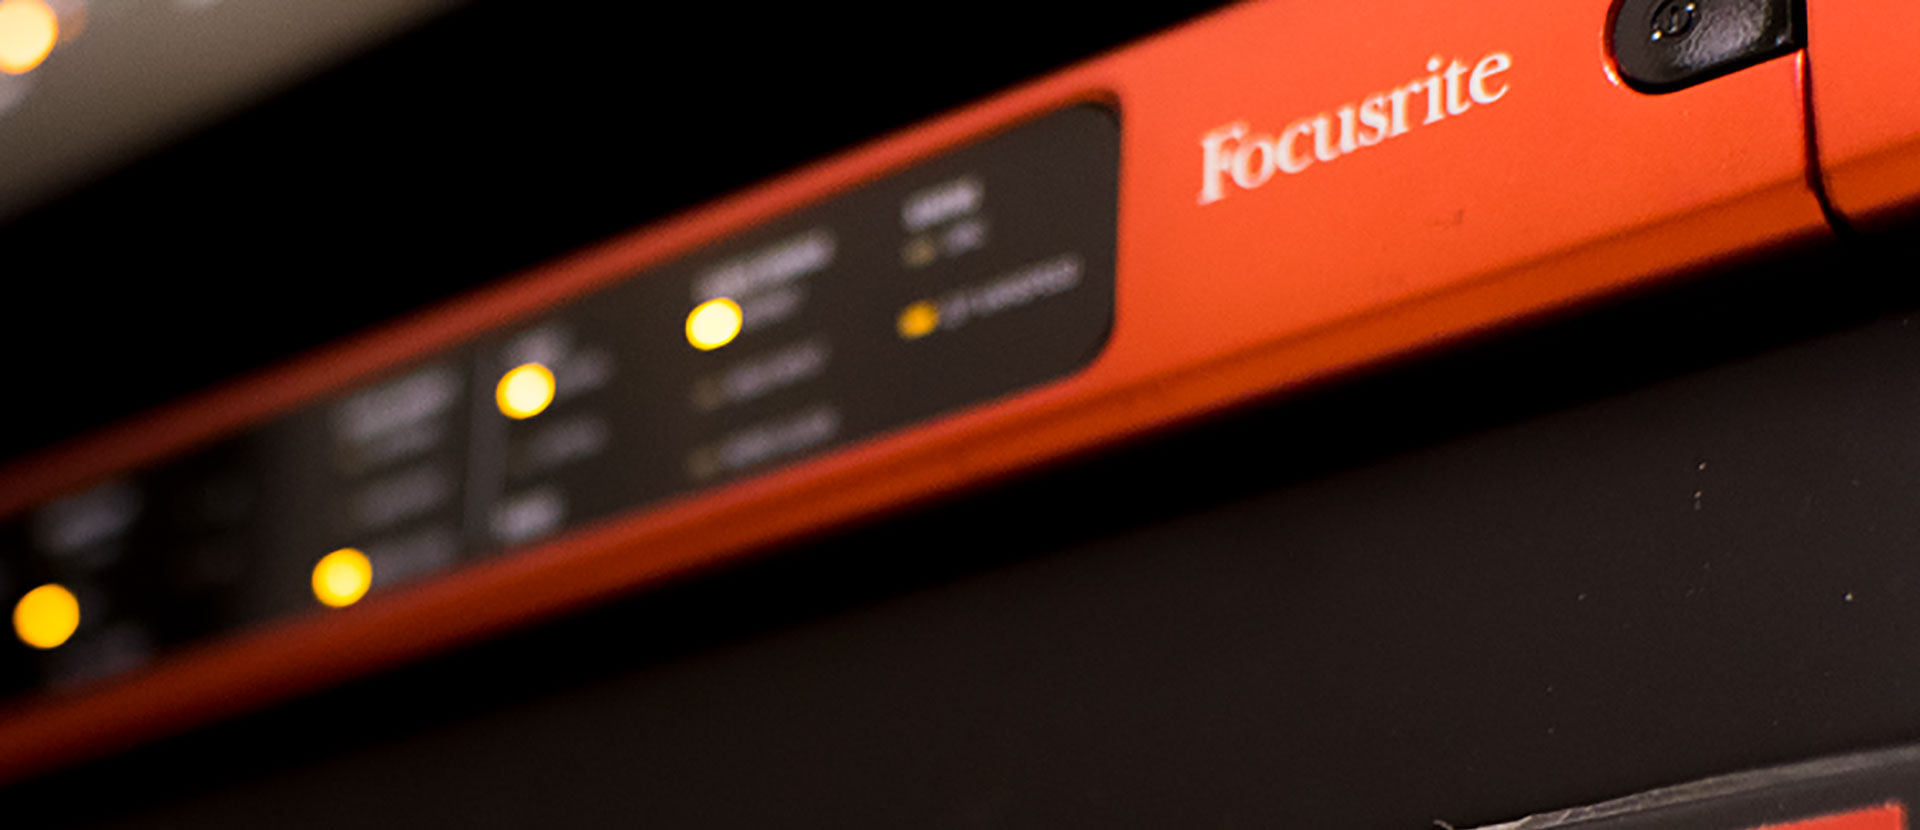 Focusrite sound system